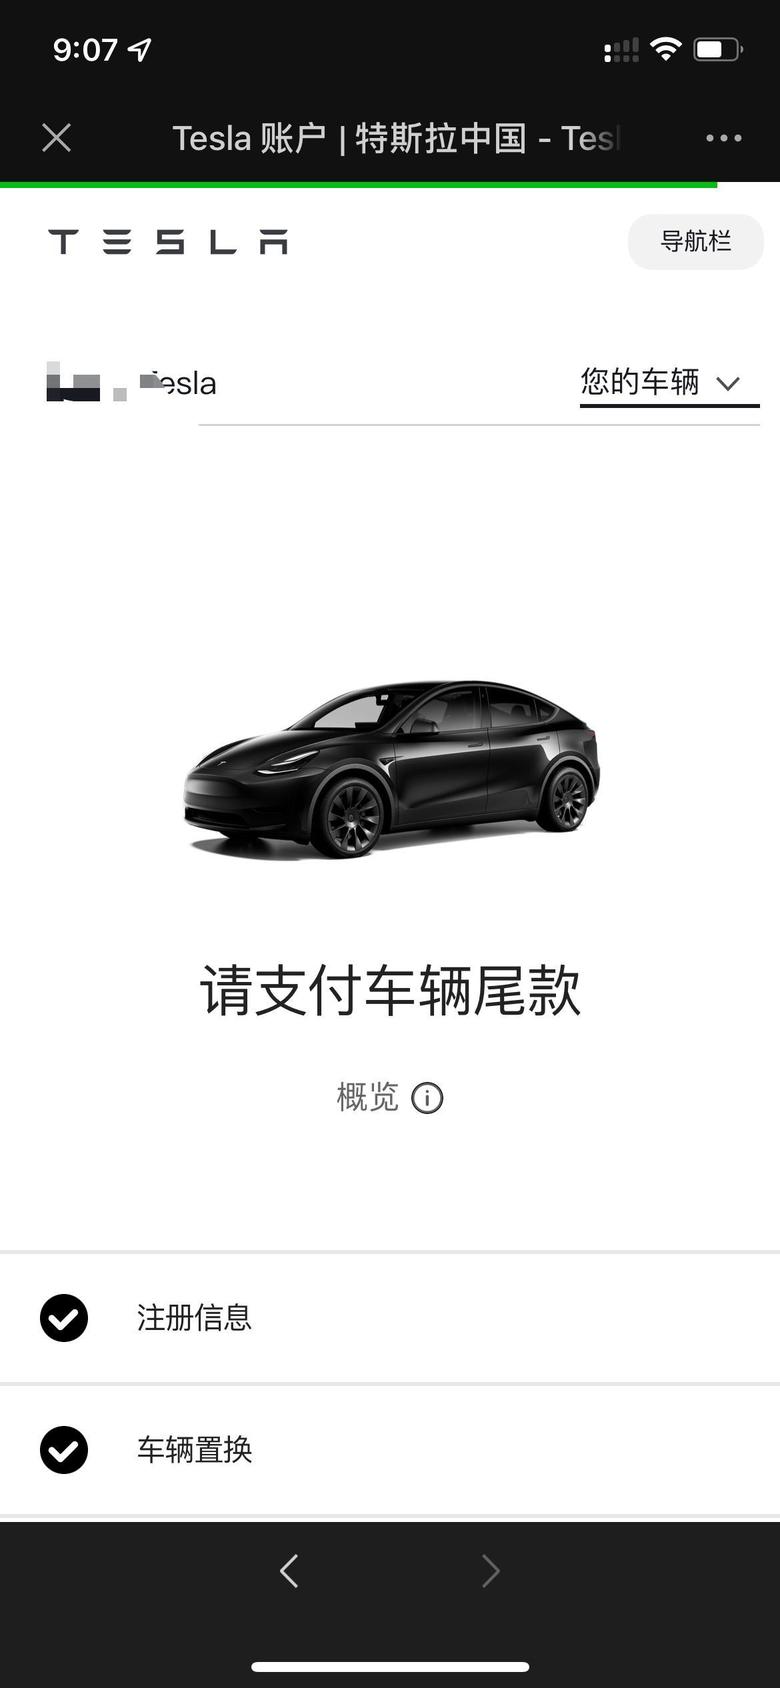 model y 广州1027定的，20寸轮毂黑色黑内，供大家参考进度哈，准备1230去提车，预祝车友们早日提车